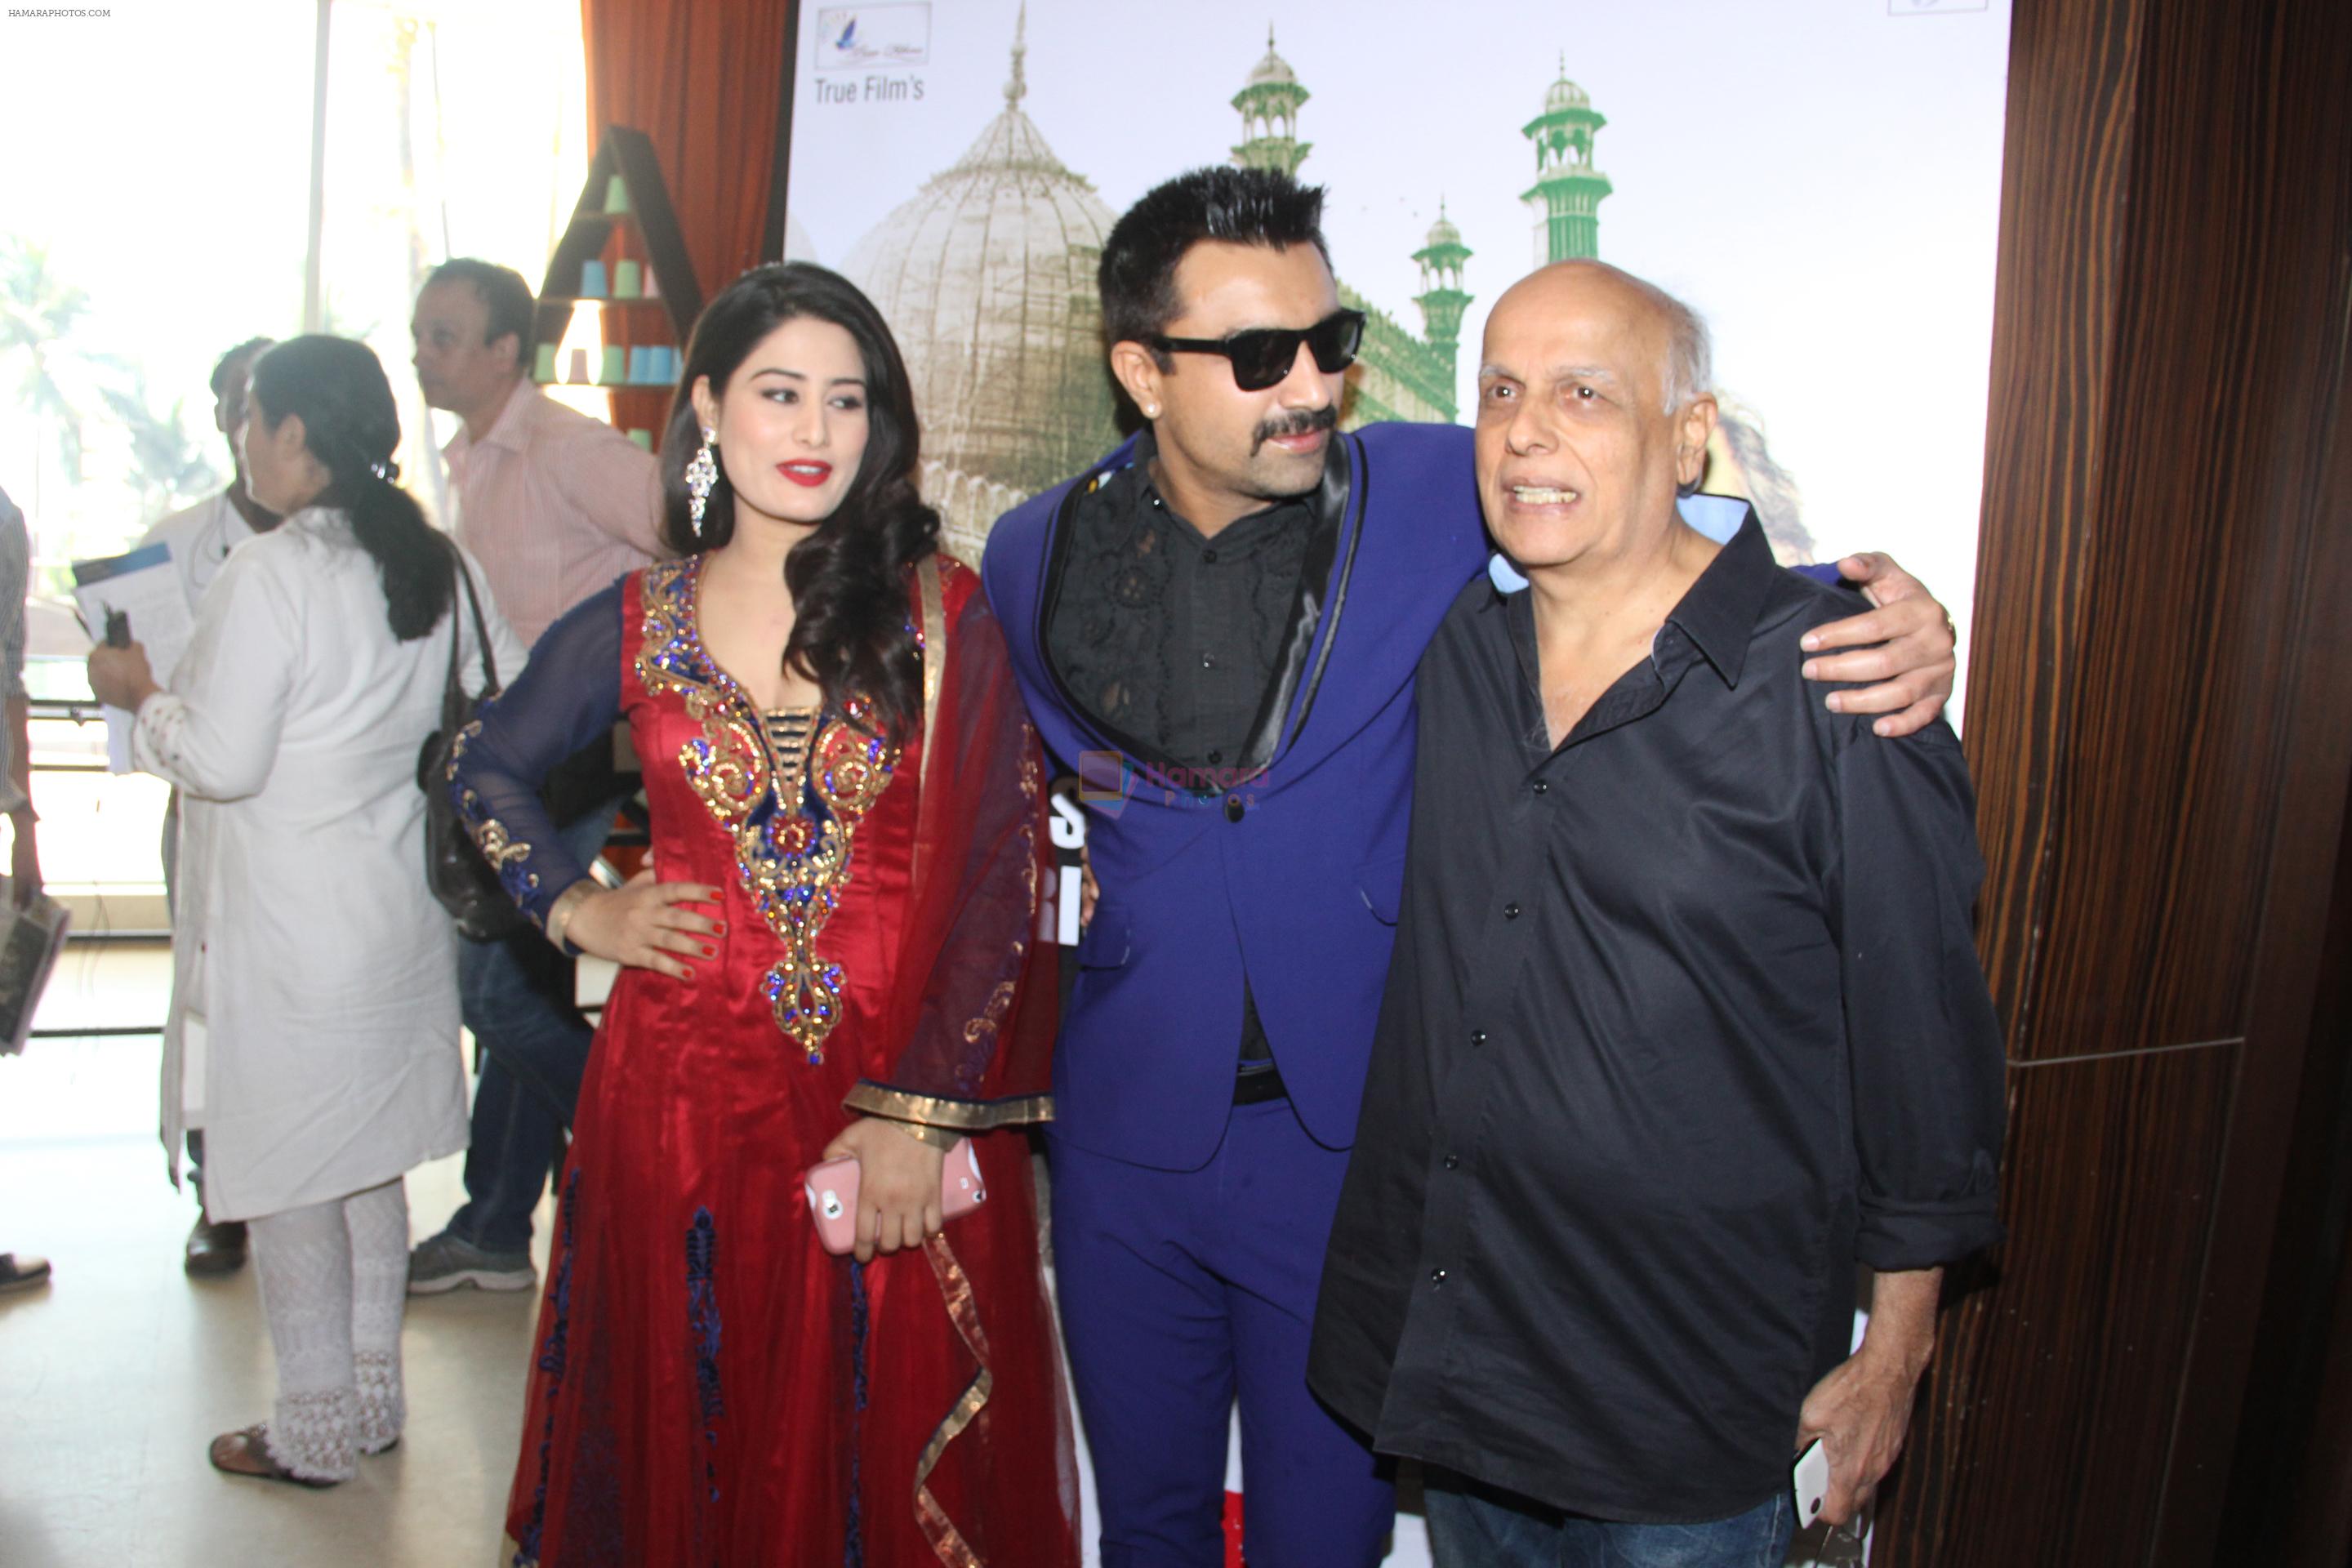 Ajaz Khan, Arjumman Mughal, Mahesh Bhatt at YA RAB Press release in Mumbai on 12th Feb 2014